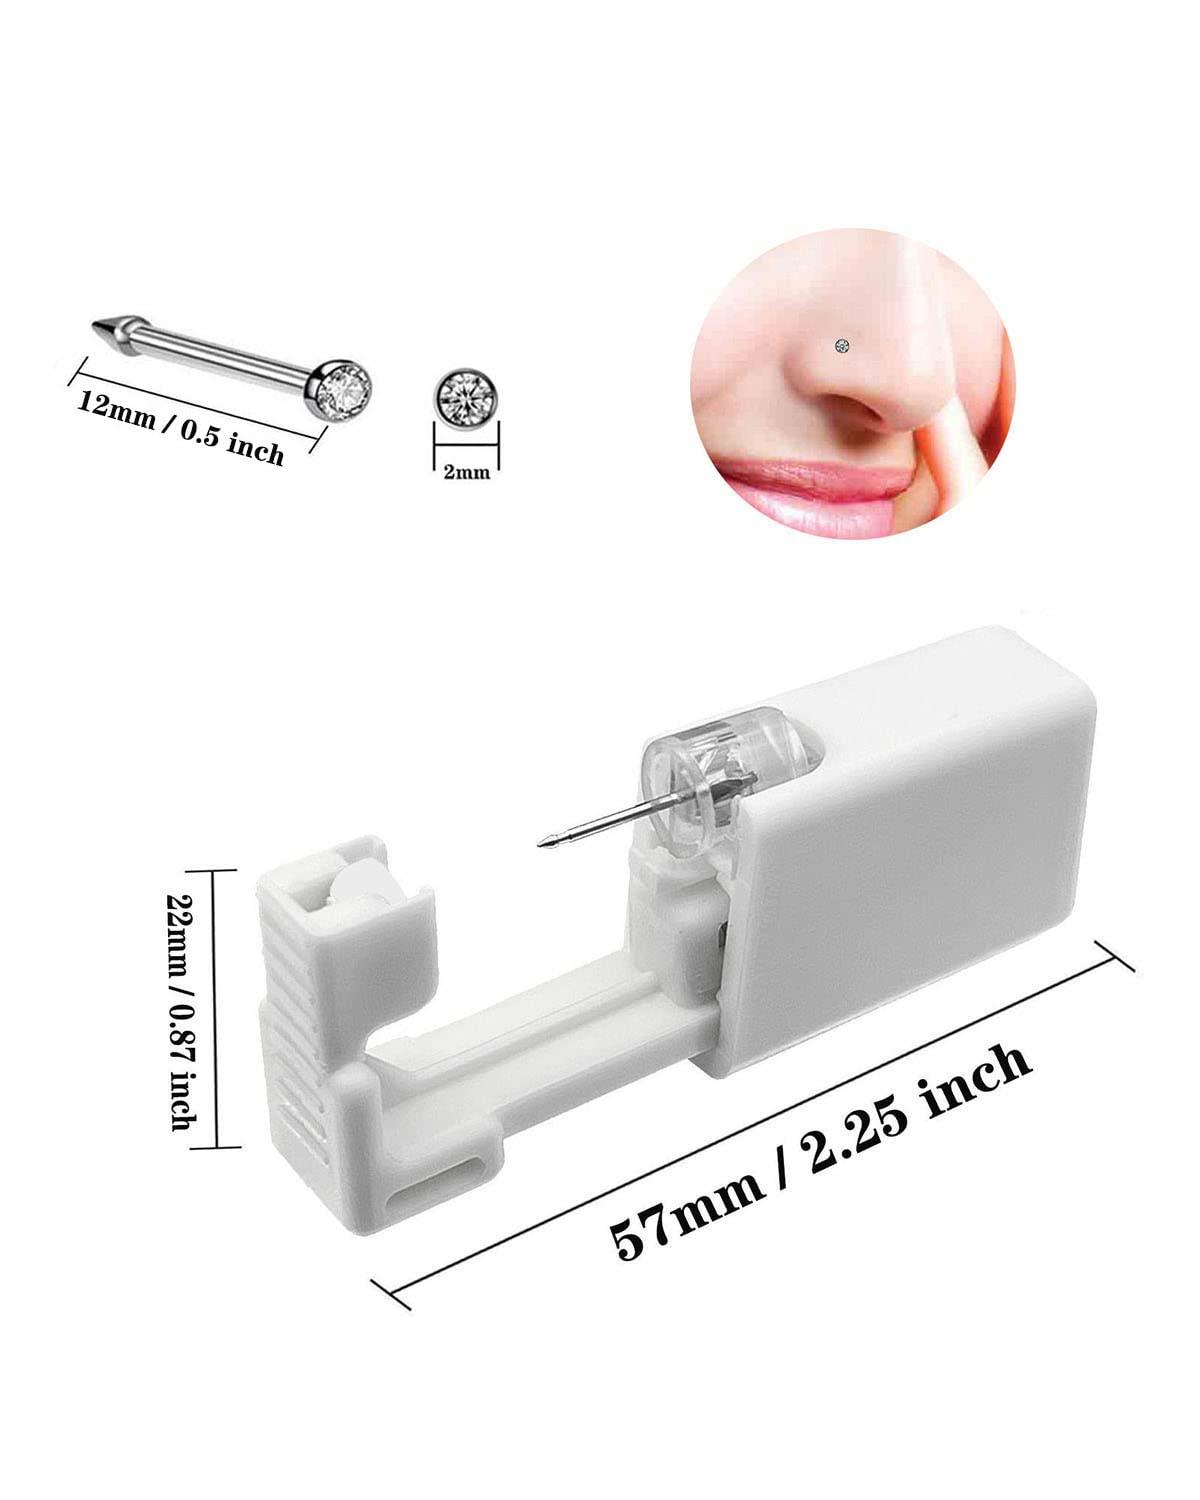 Piercing Gun Disposable Sterile Ear Piercing Kit + Free Crystal